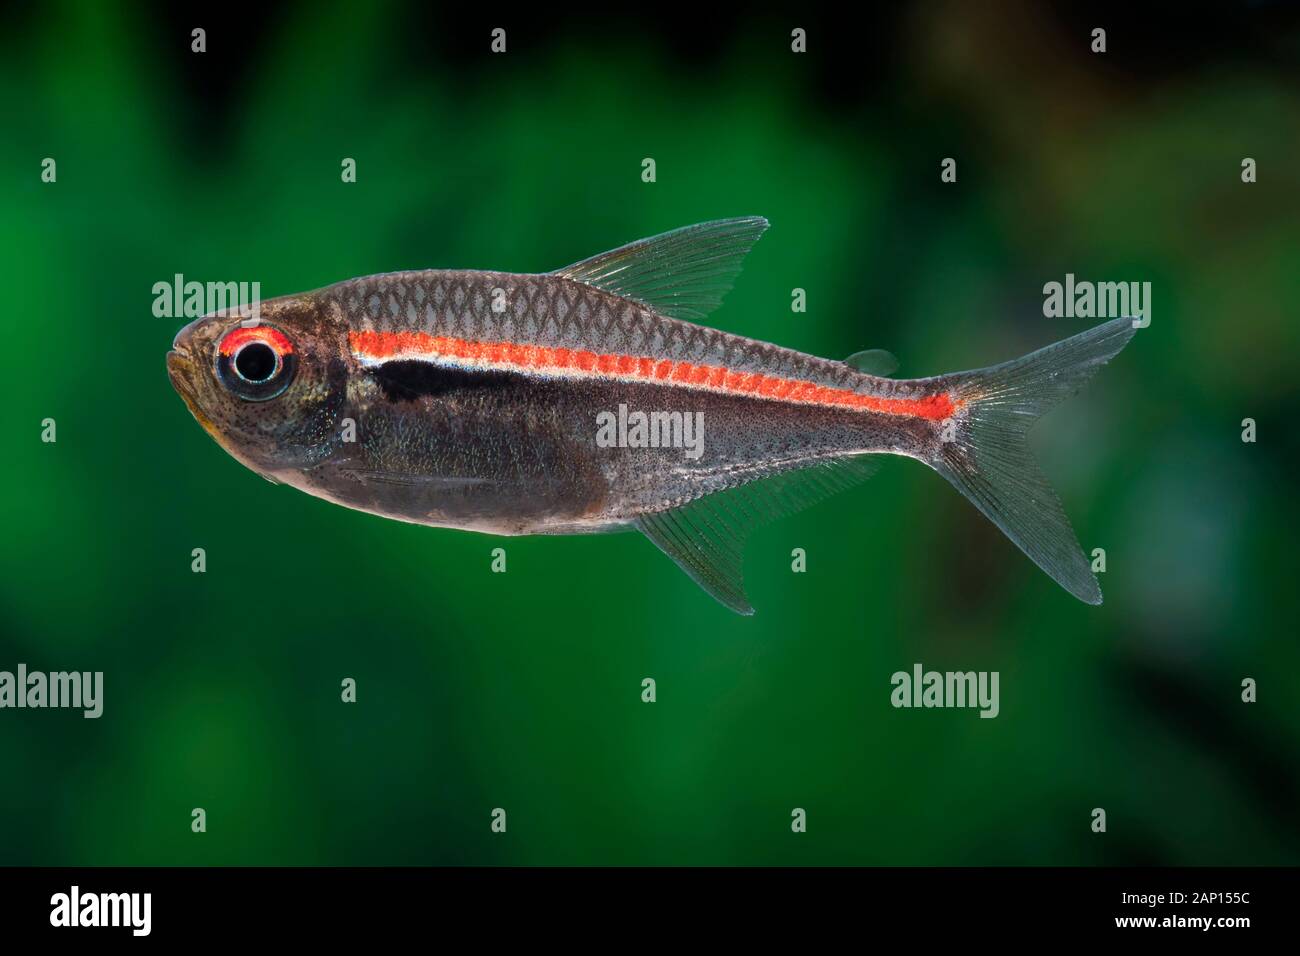 Amapa Tetra (Hyphessobrycon amapaensis). Single fish in an aquarium Stock Photo